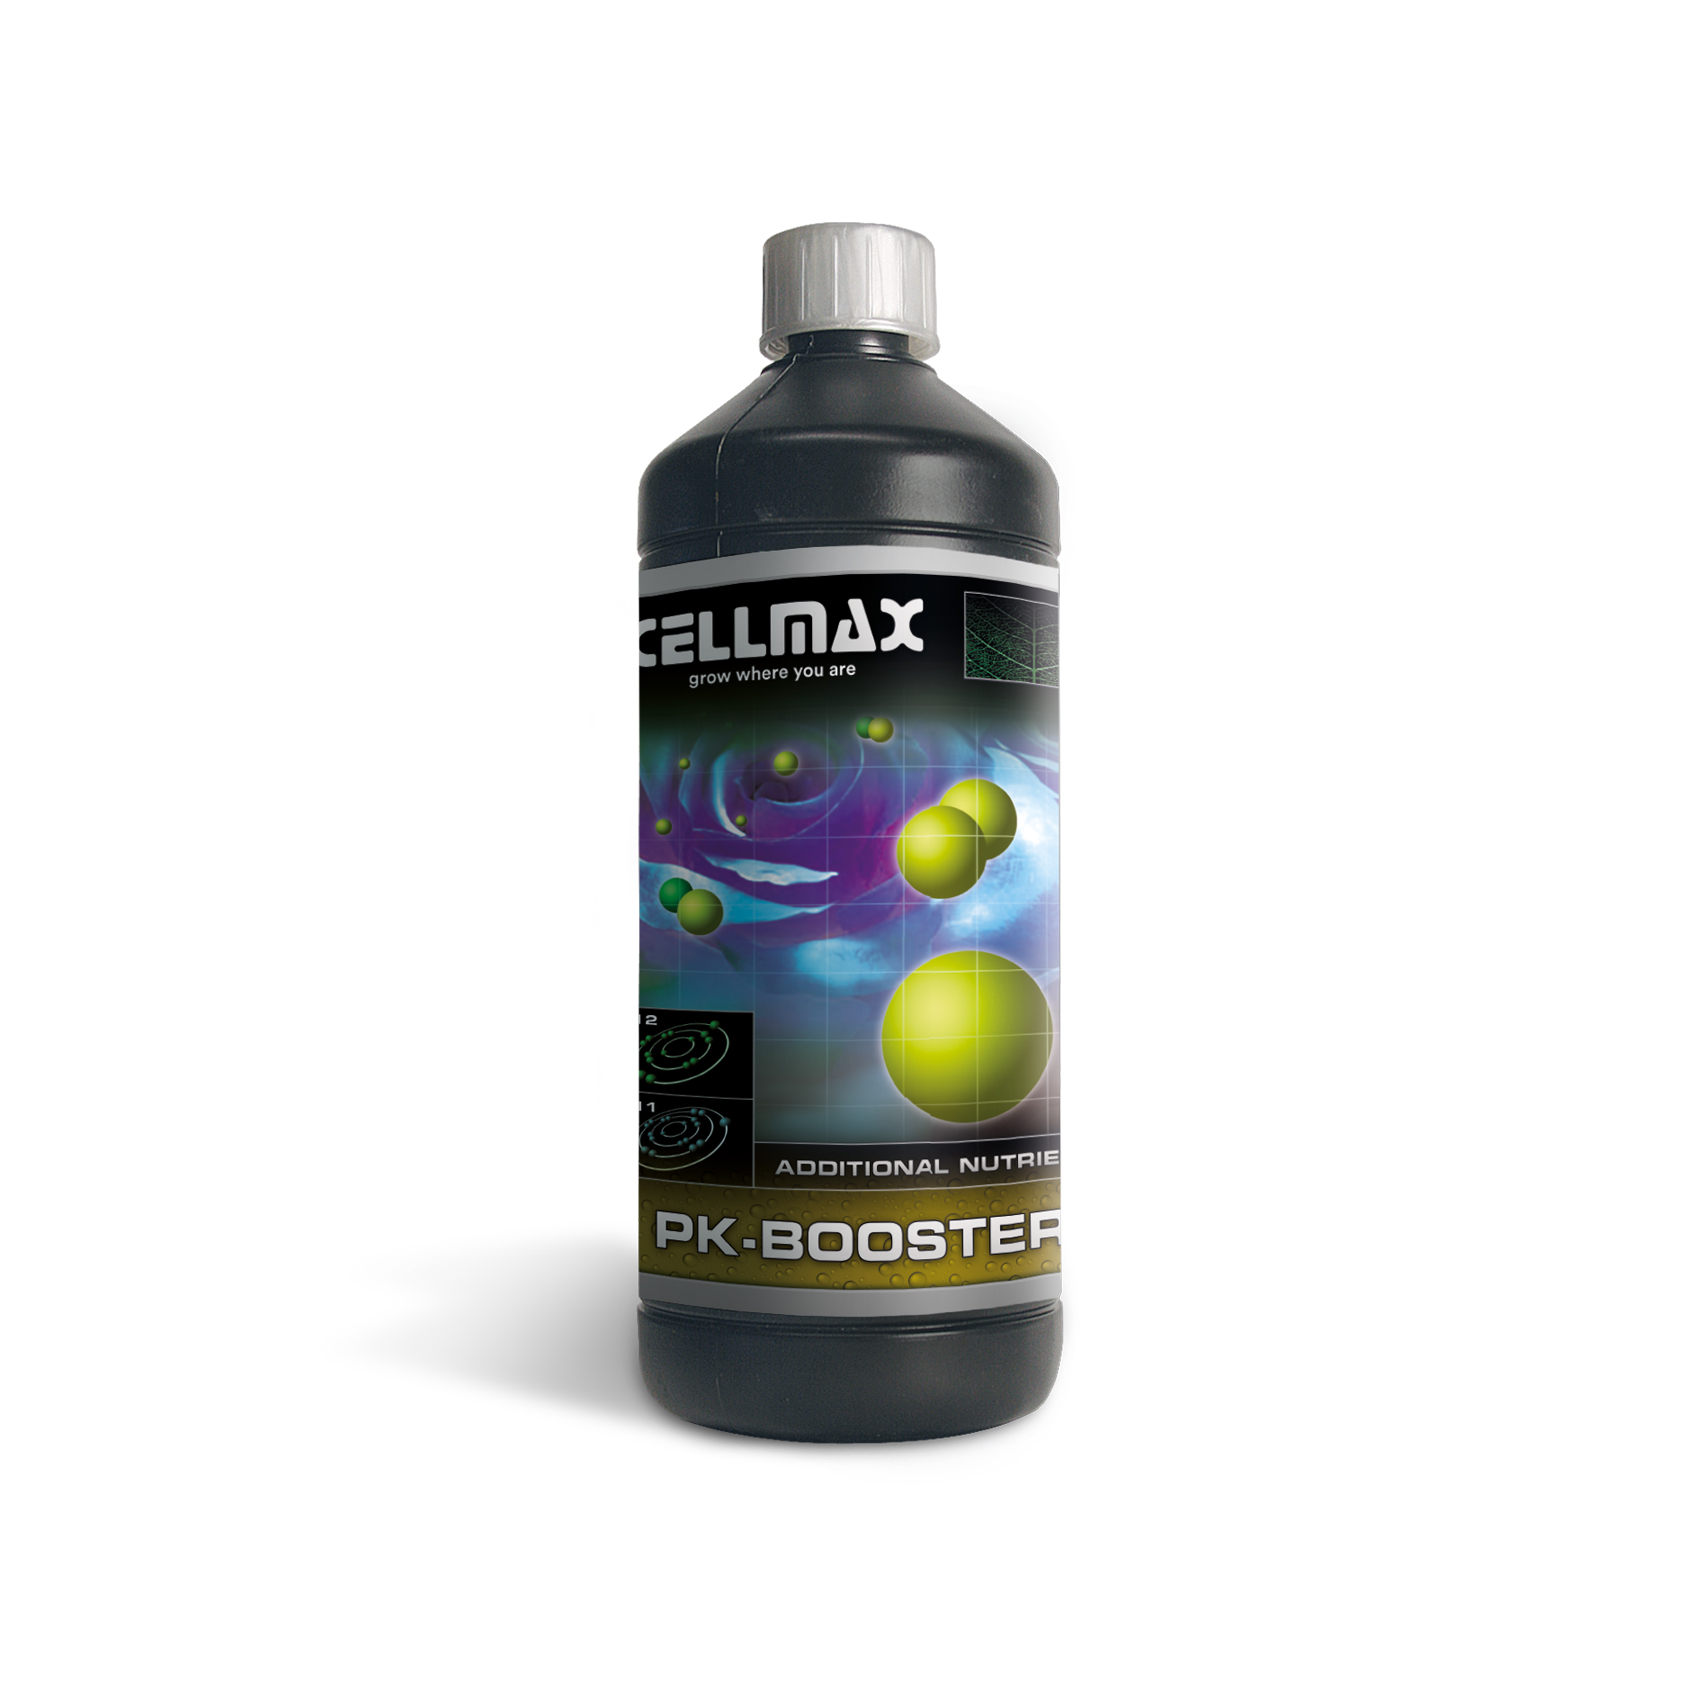 Cellmax PK Booster